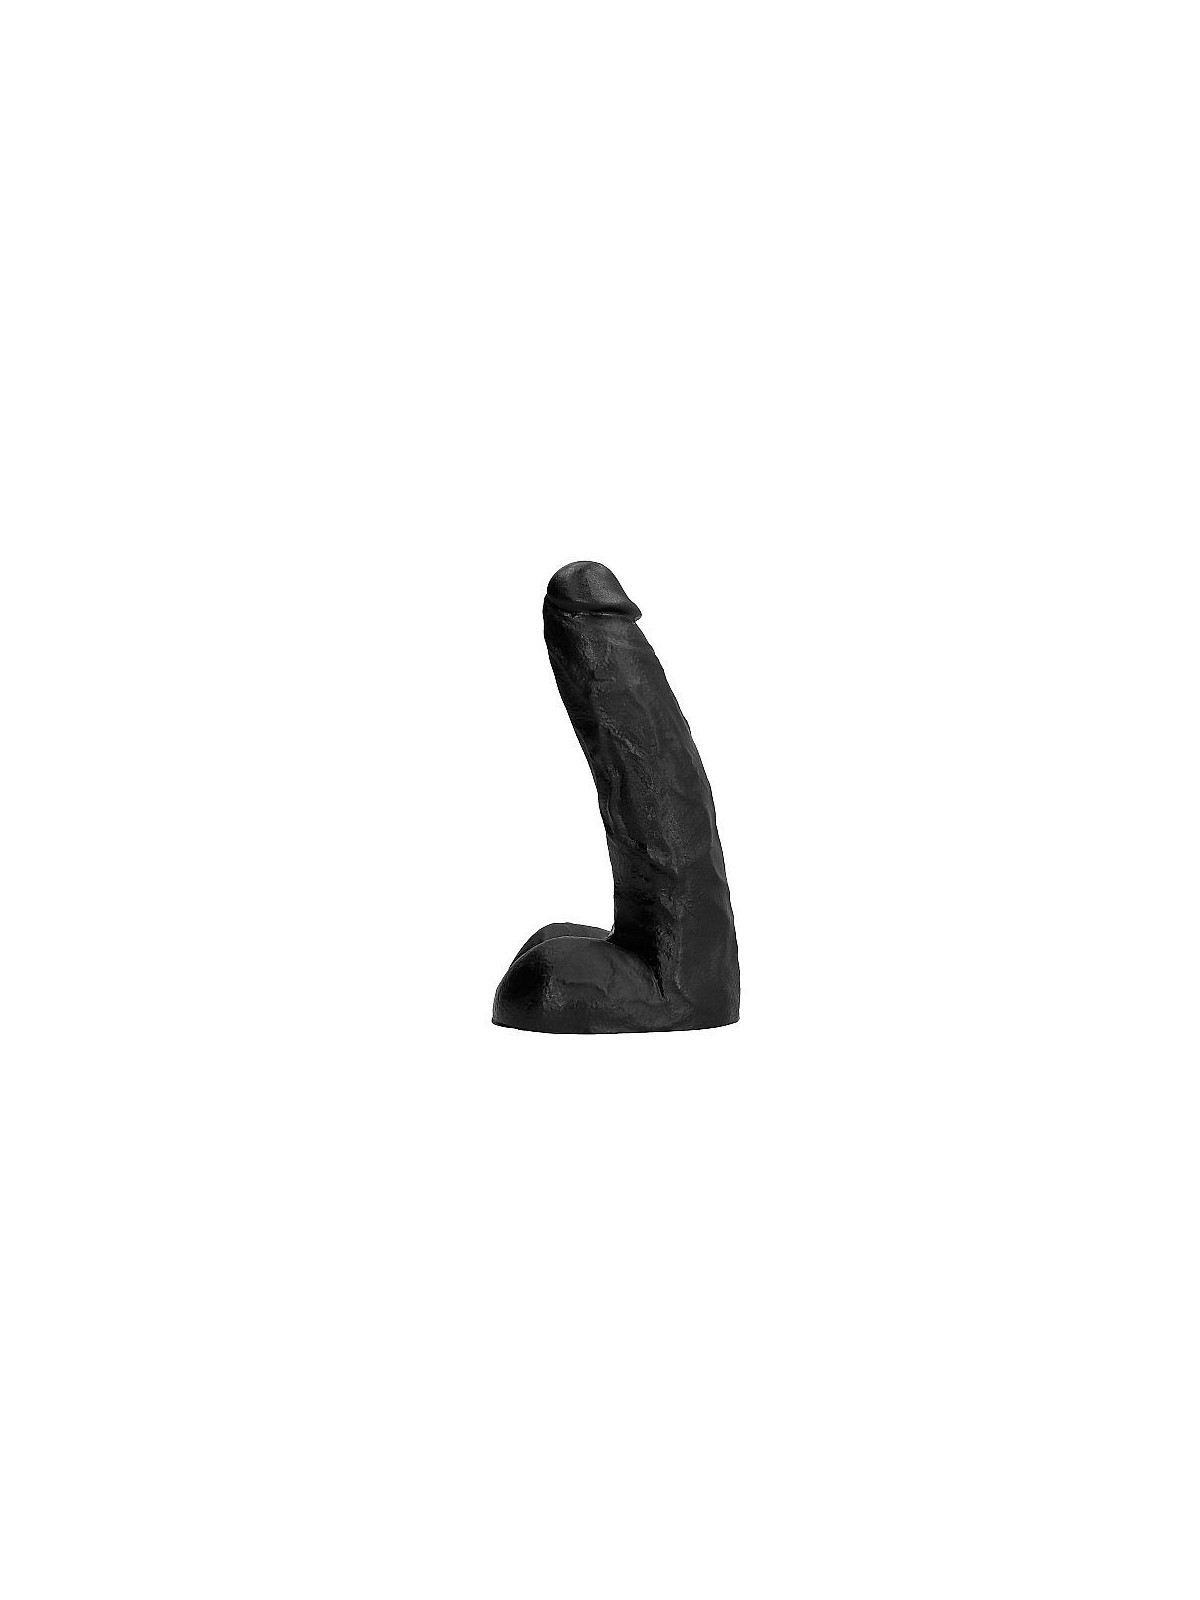 All Black Dong 22 cm - Comprar Dildo gigante All Black - Penes realistas (1)